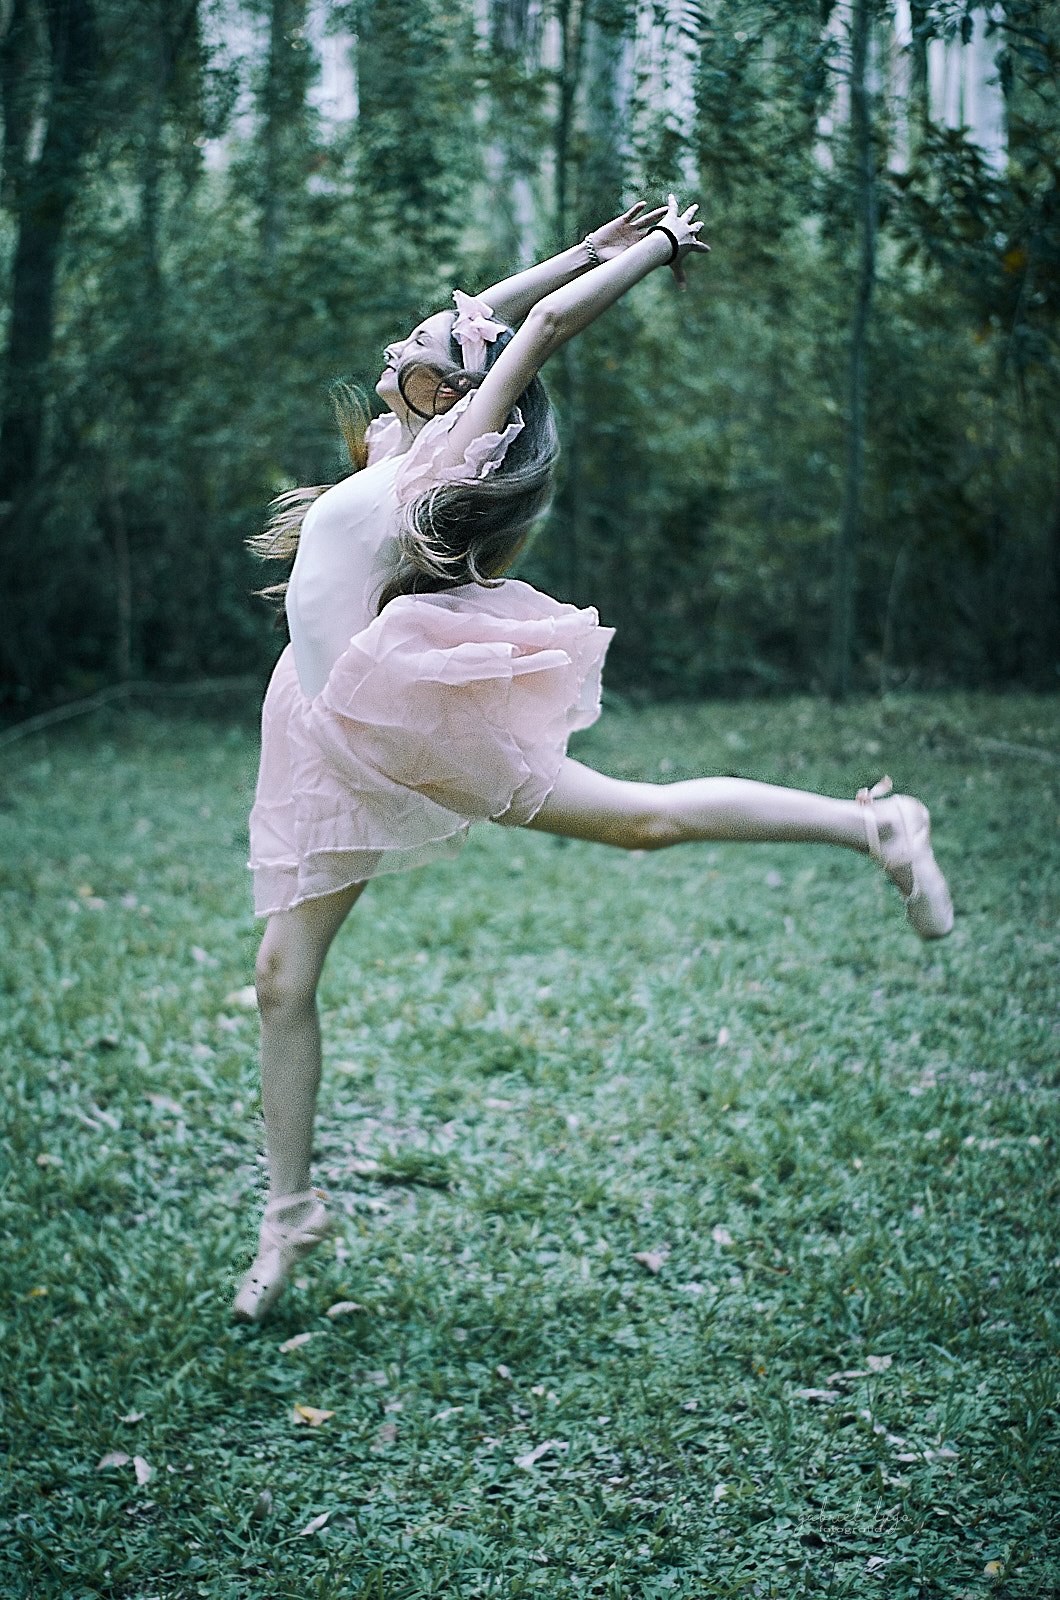 Ballerina Ballet Legs Skirt Dress Long Hair Yanela Roda Nature Women Outdoors Teens Model Argentinia 1060x1600